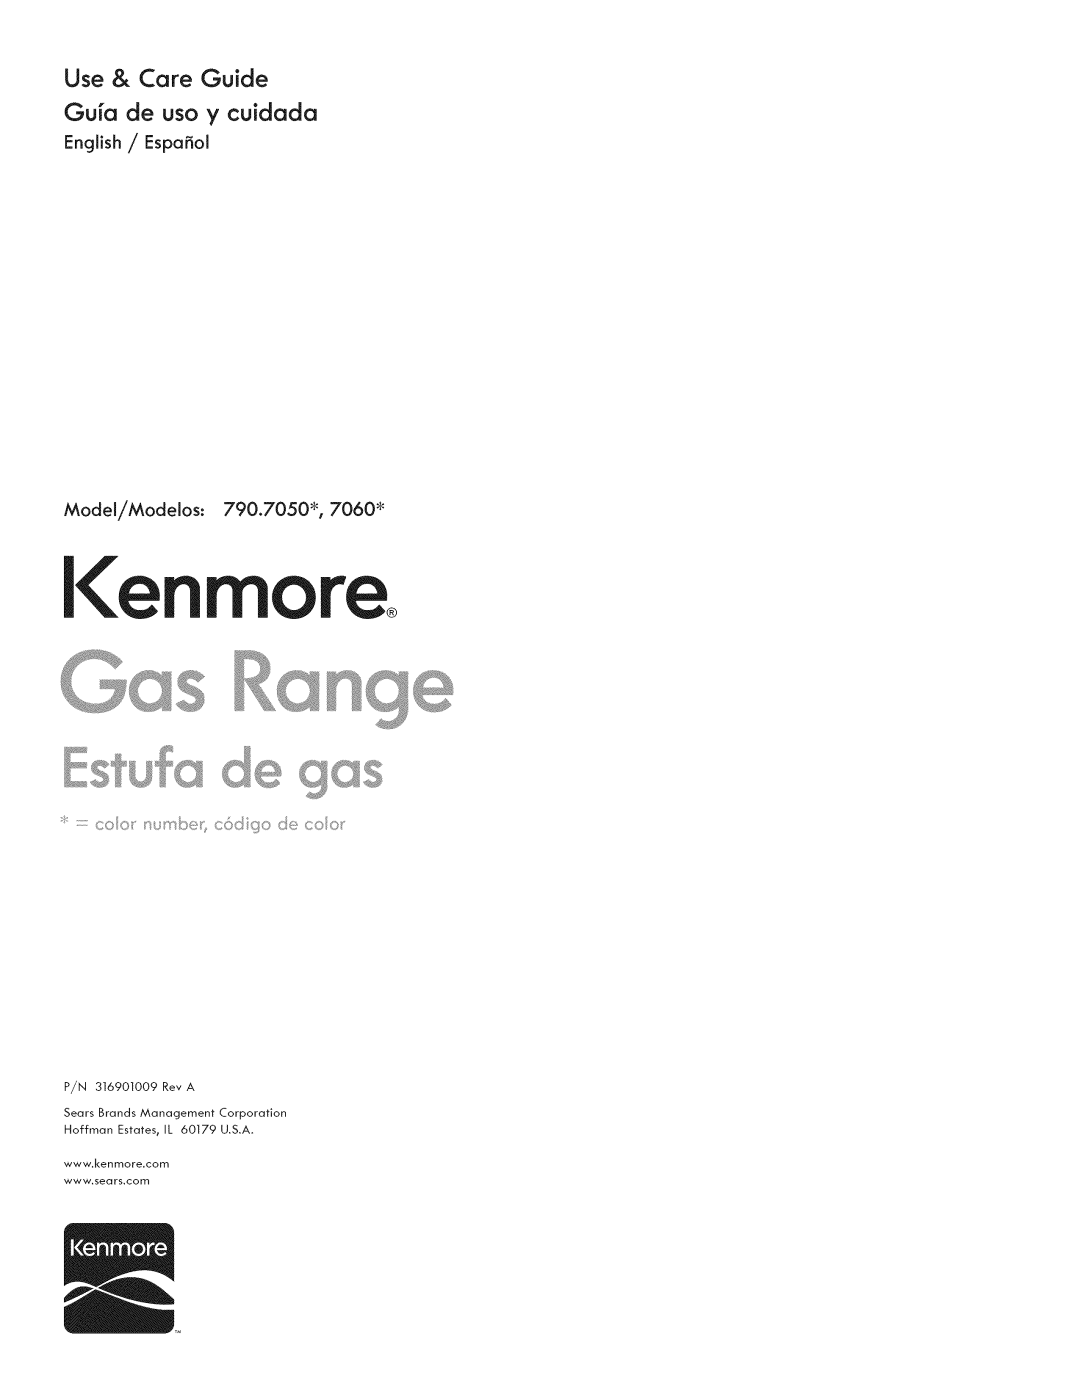 Kenmore 790.7060 manual I en, English / Espafiol, Model/Modelos 790.7050%, P/N 316901009 Rev A 